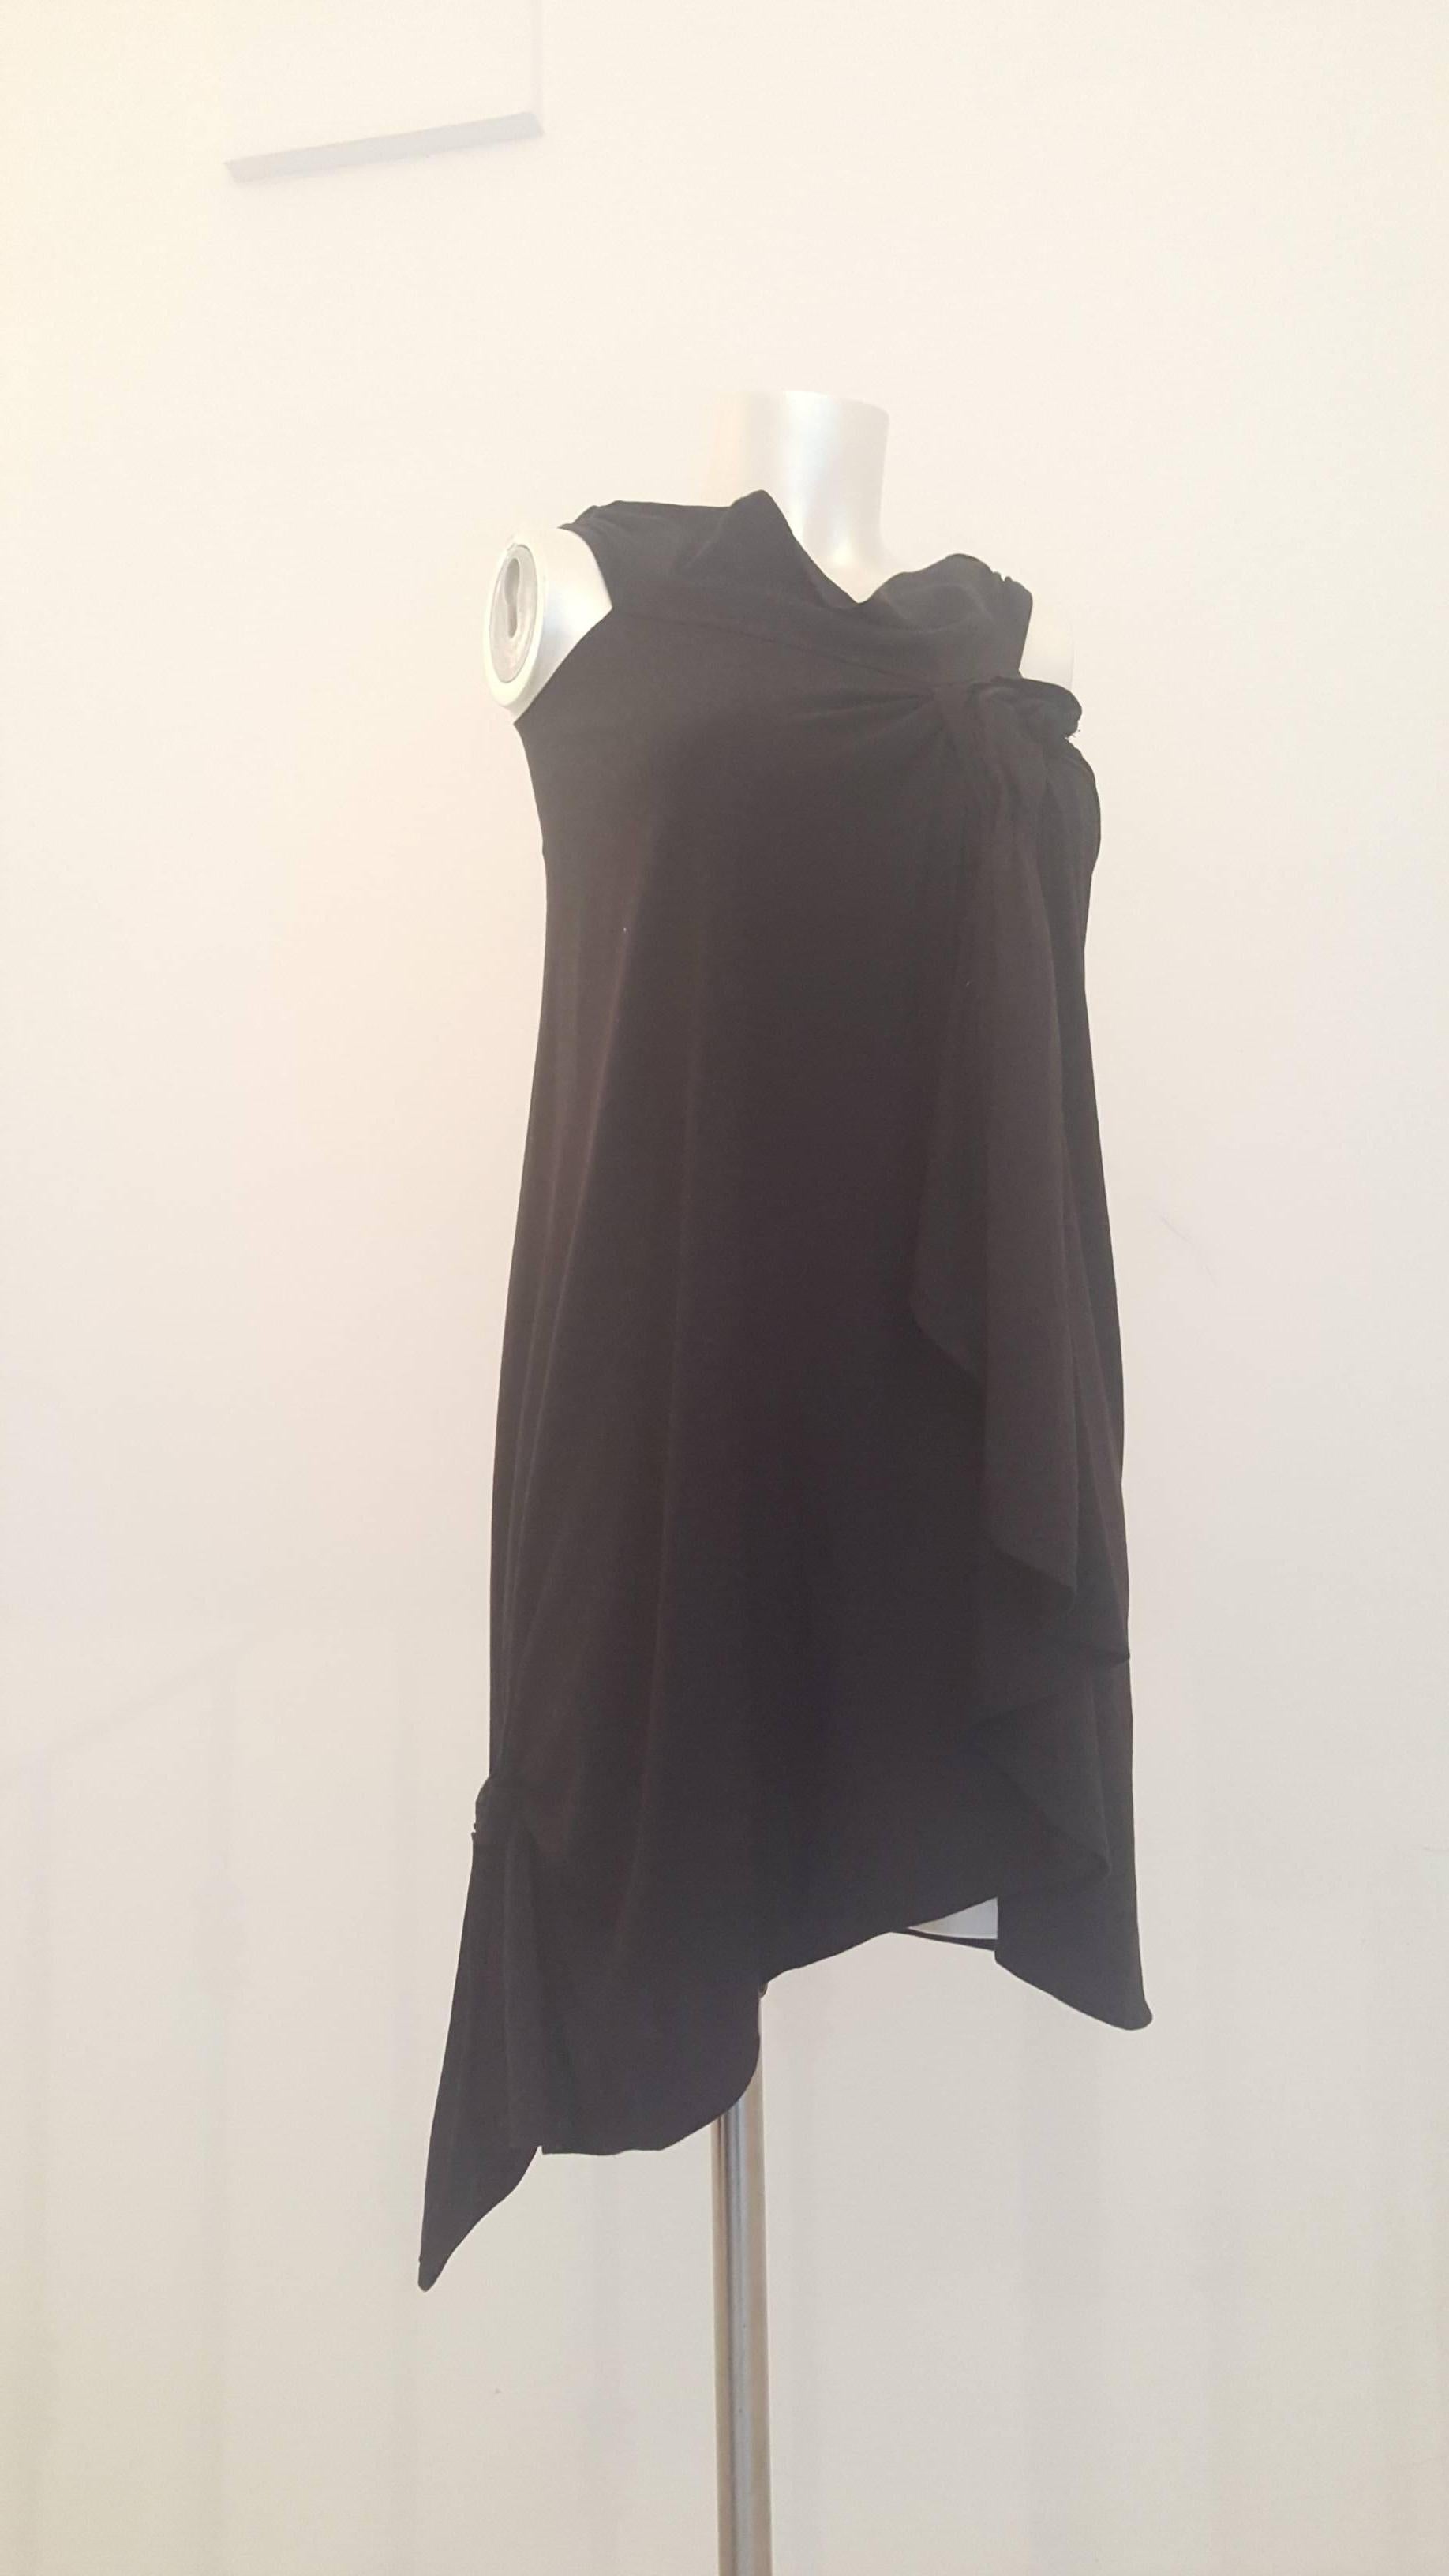 2010 Yves Saint Laurent black dress in french size 36 